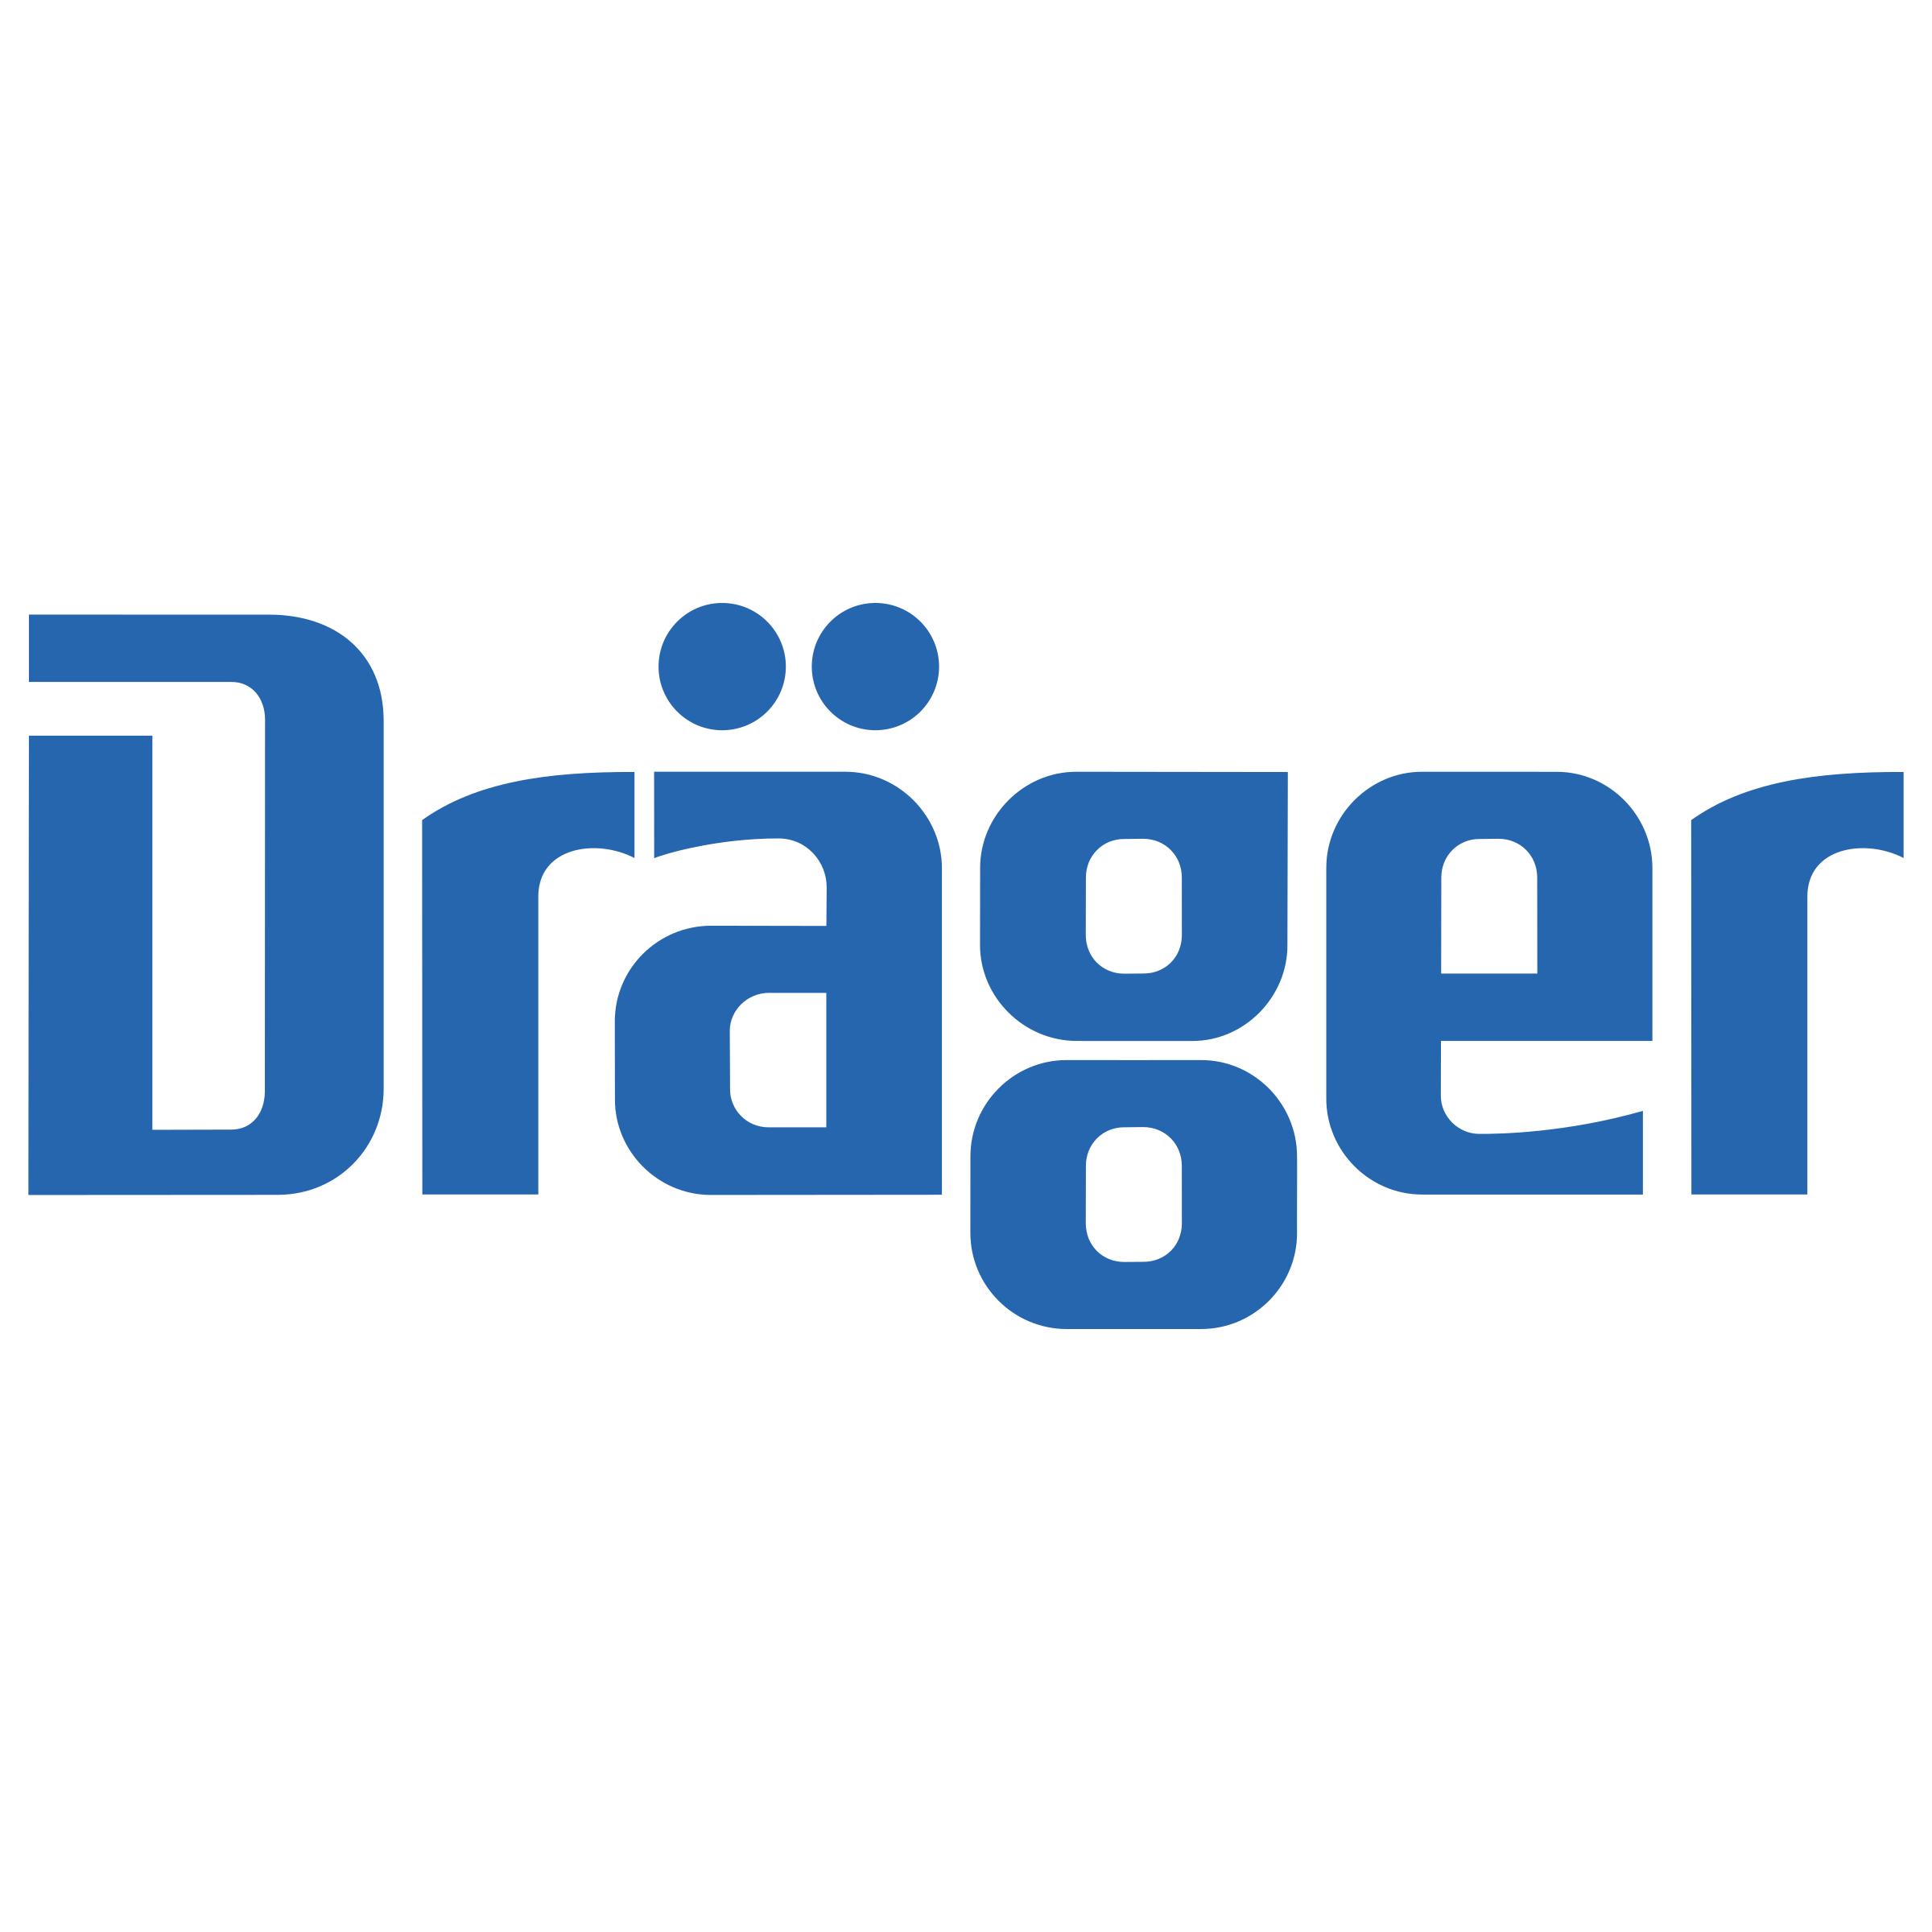 Draeger Medical AG & Co